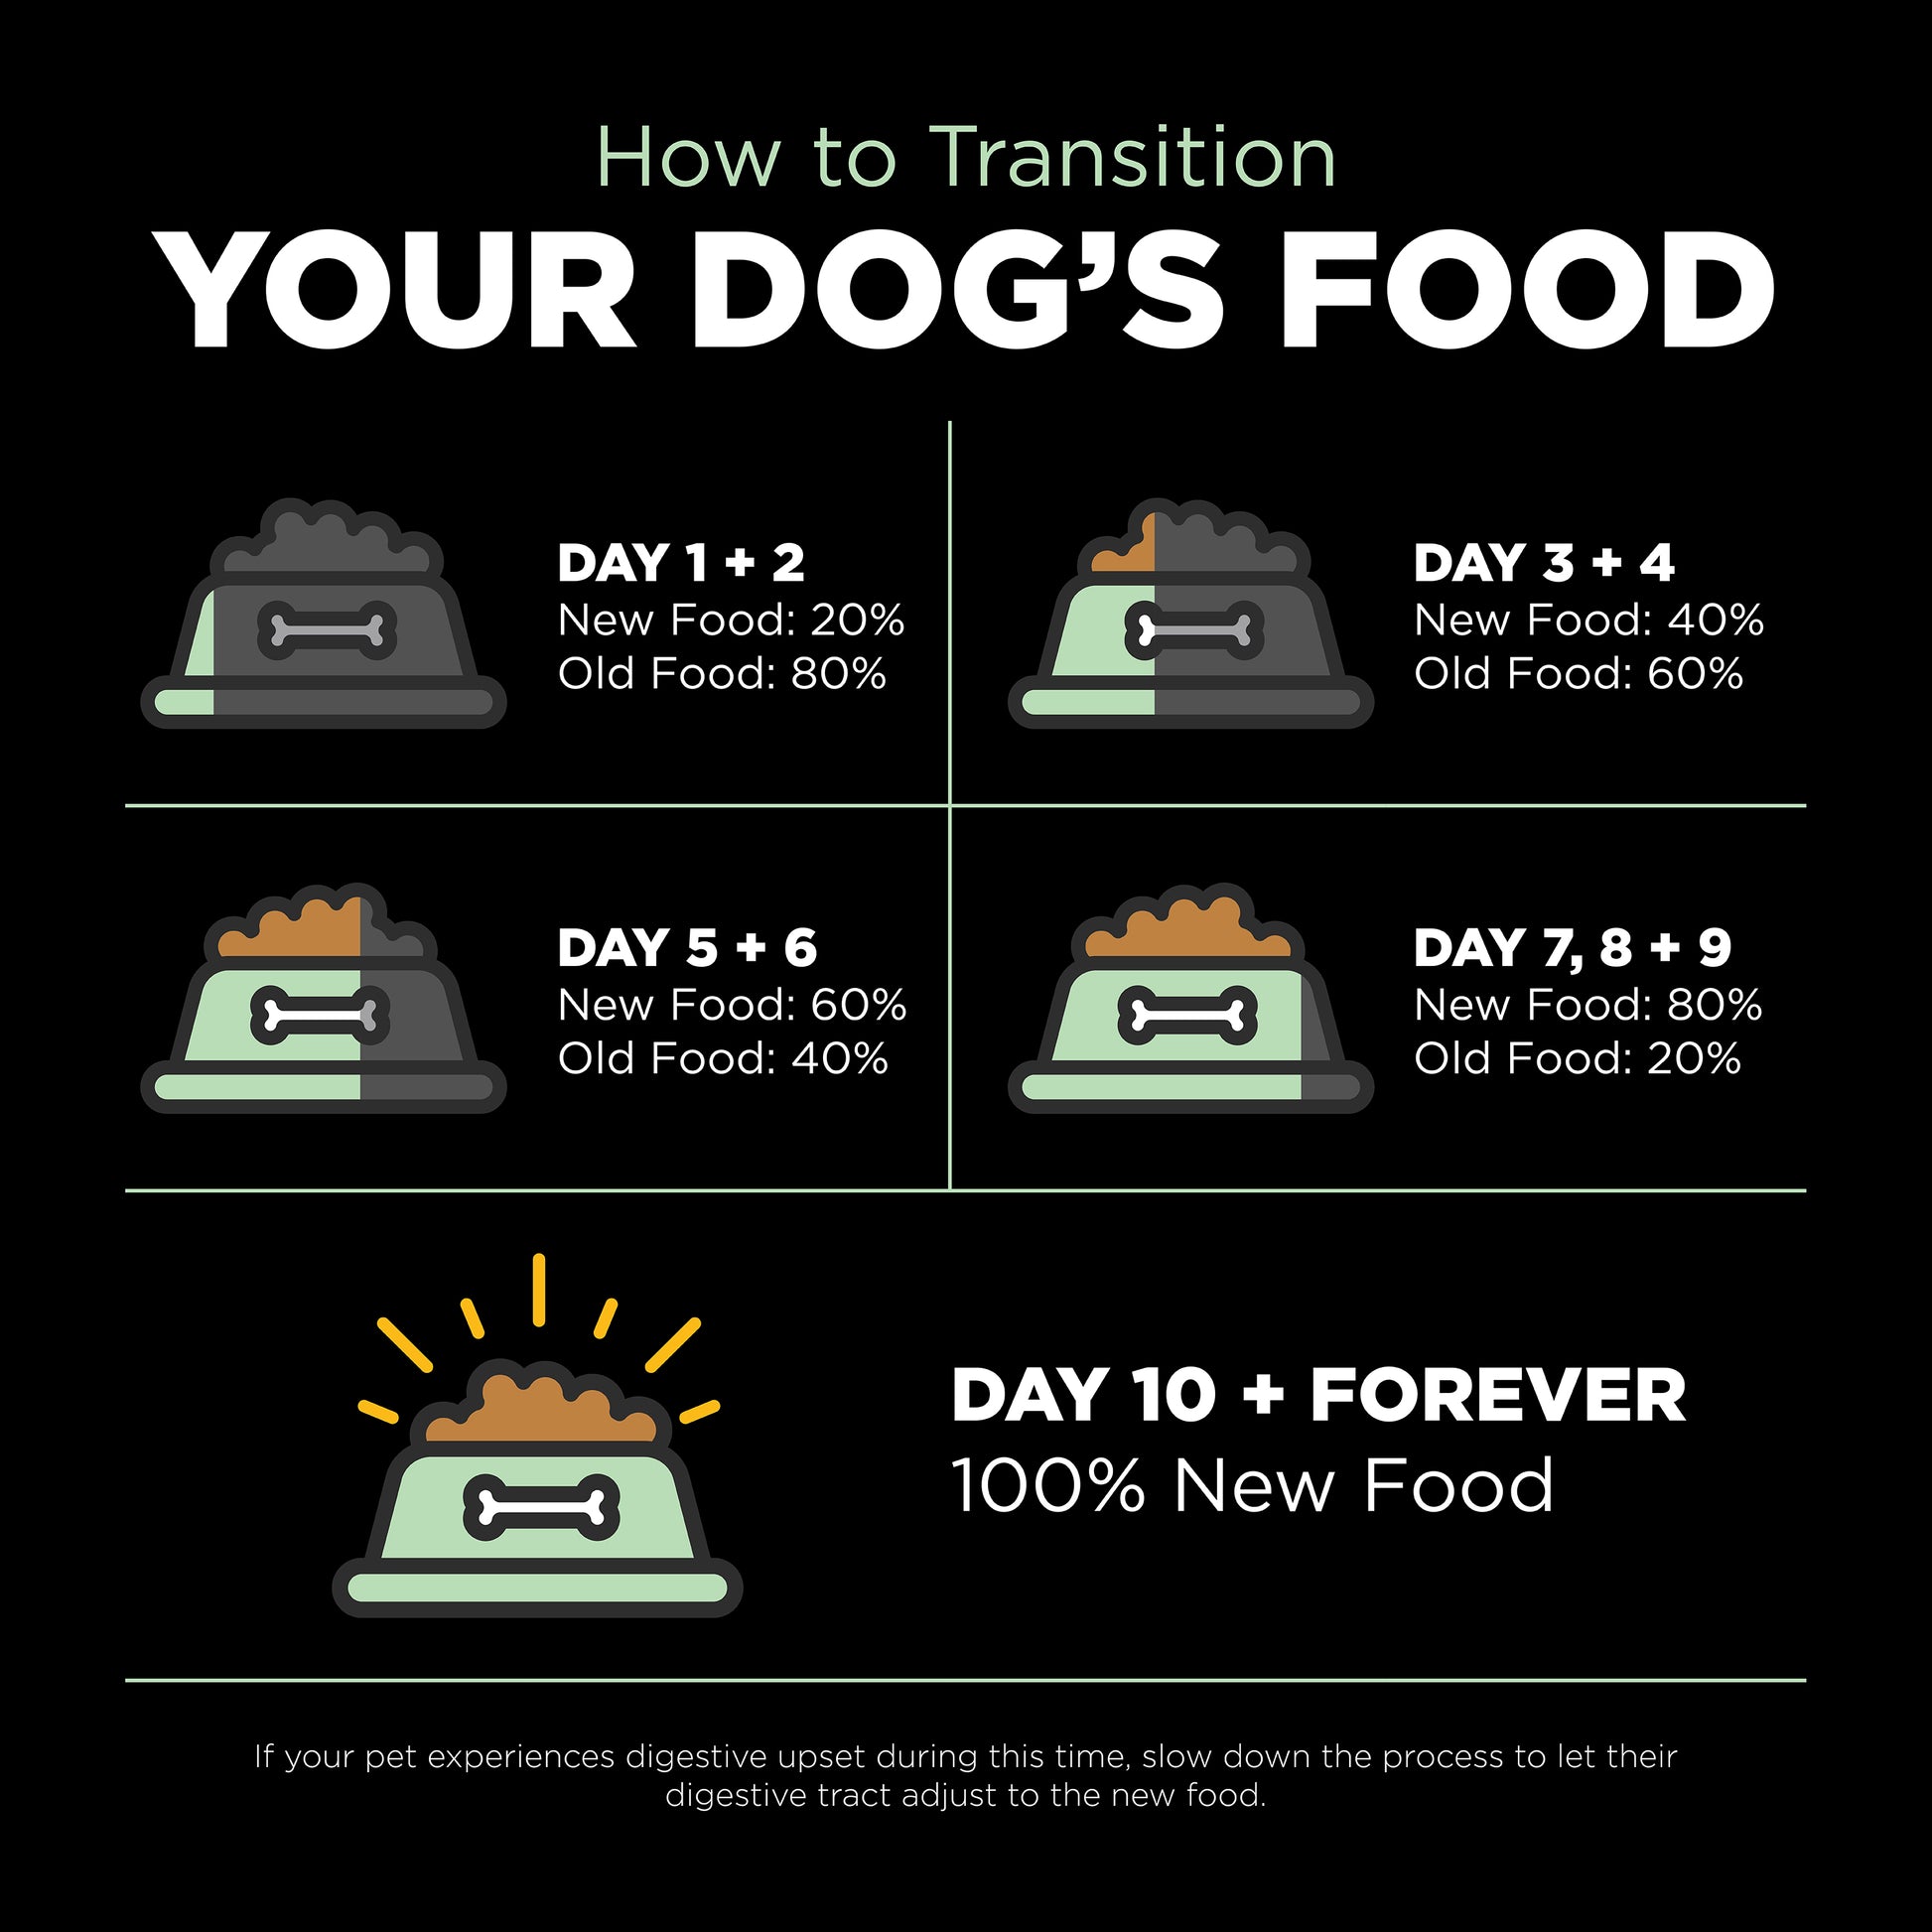 GO! SKIN + COAT CARE Turkey Recipe for dogs  Dog Food  | PetMax Canada